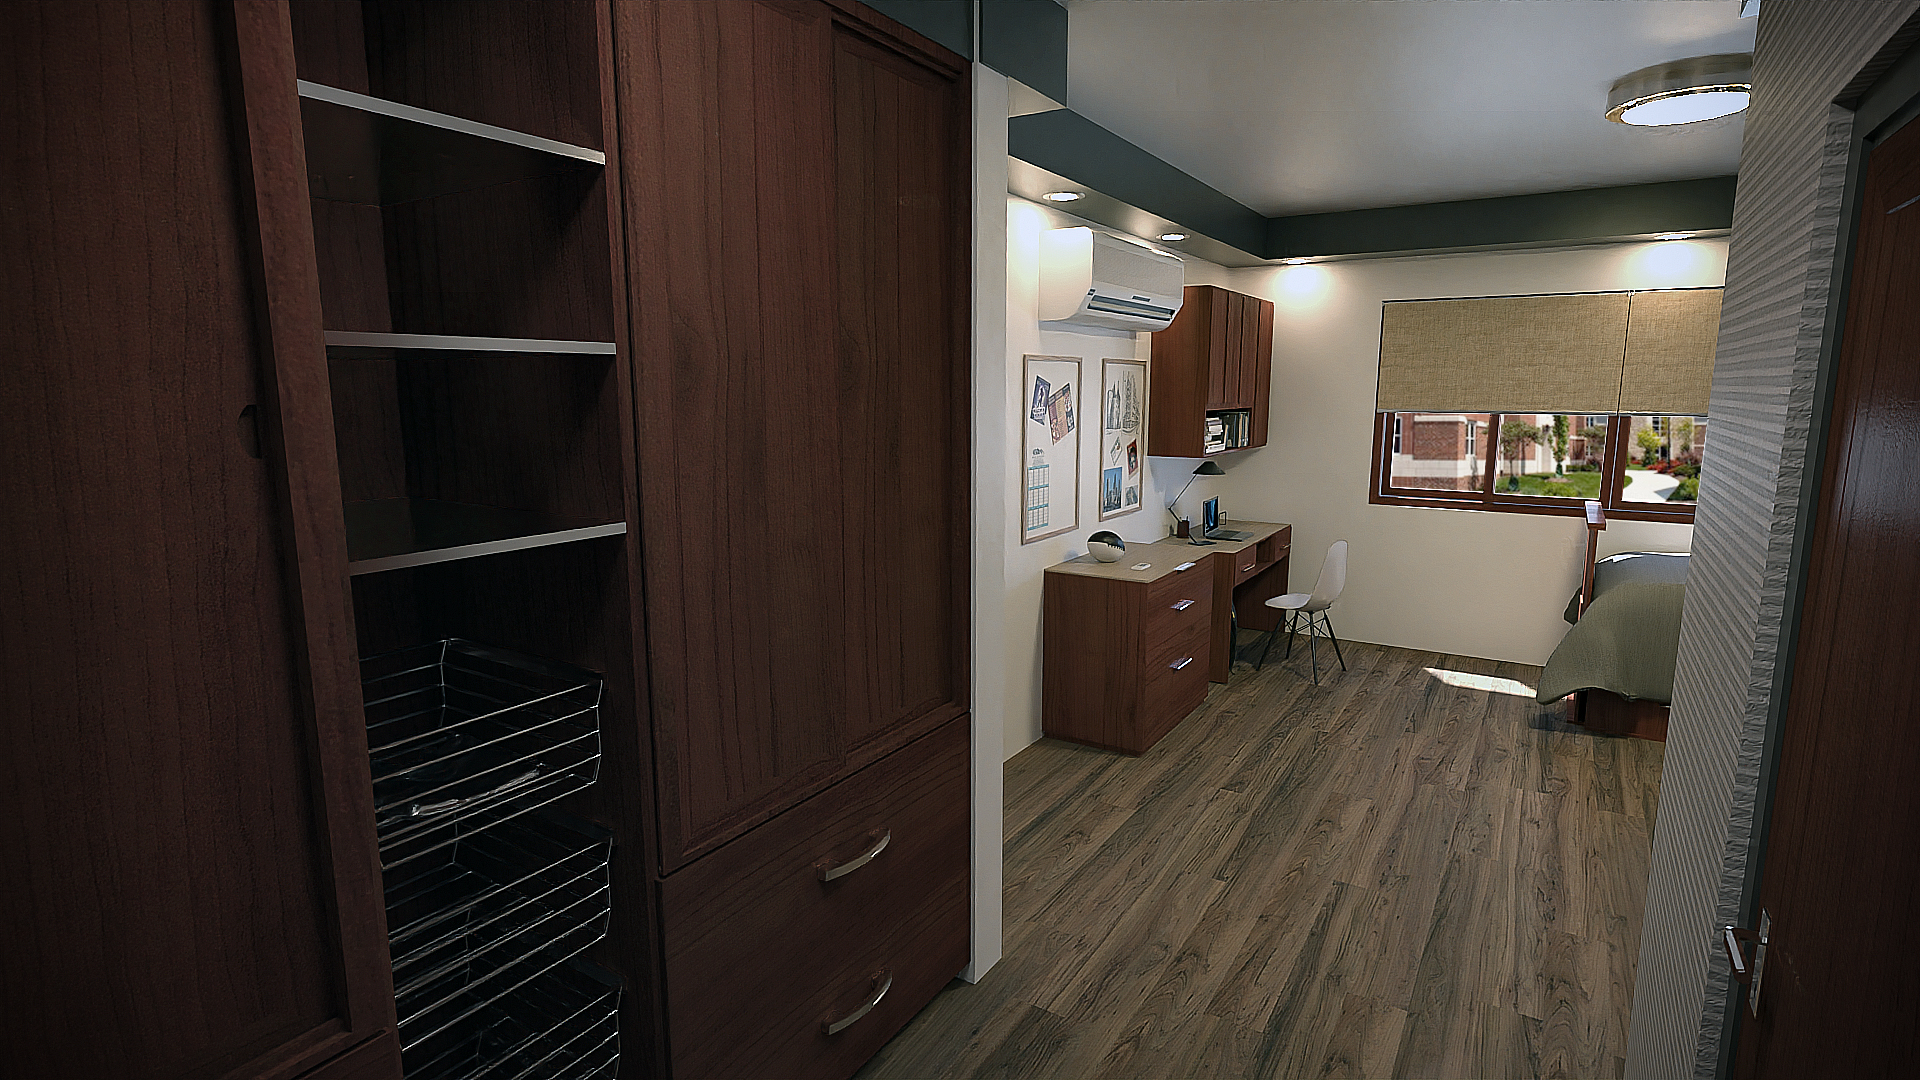 Boys Dorm Room by: Tesla3dCorp, 3D Models by Daz 3D